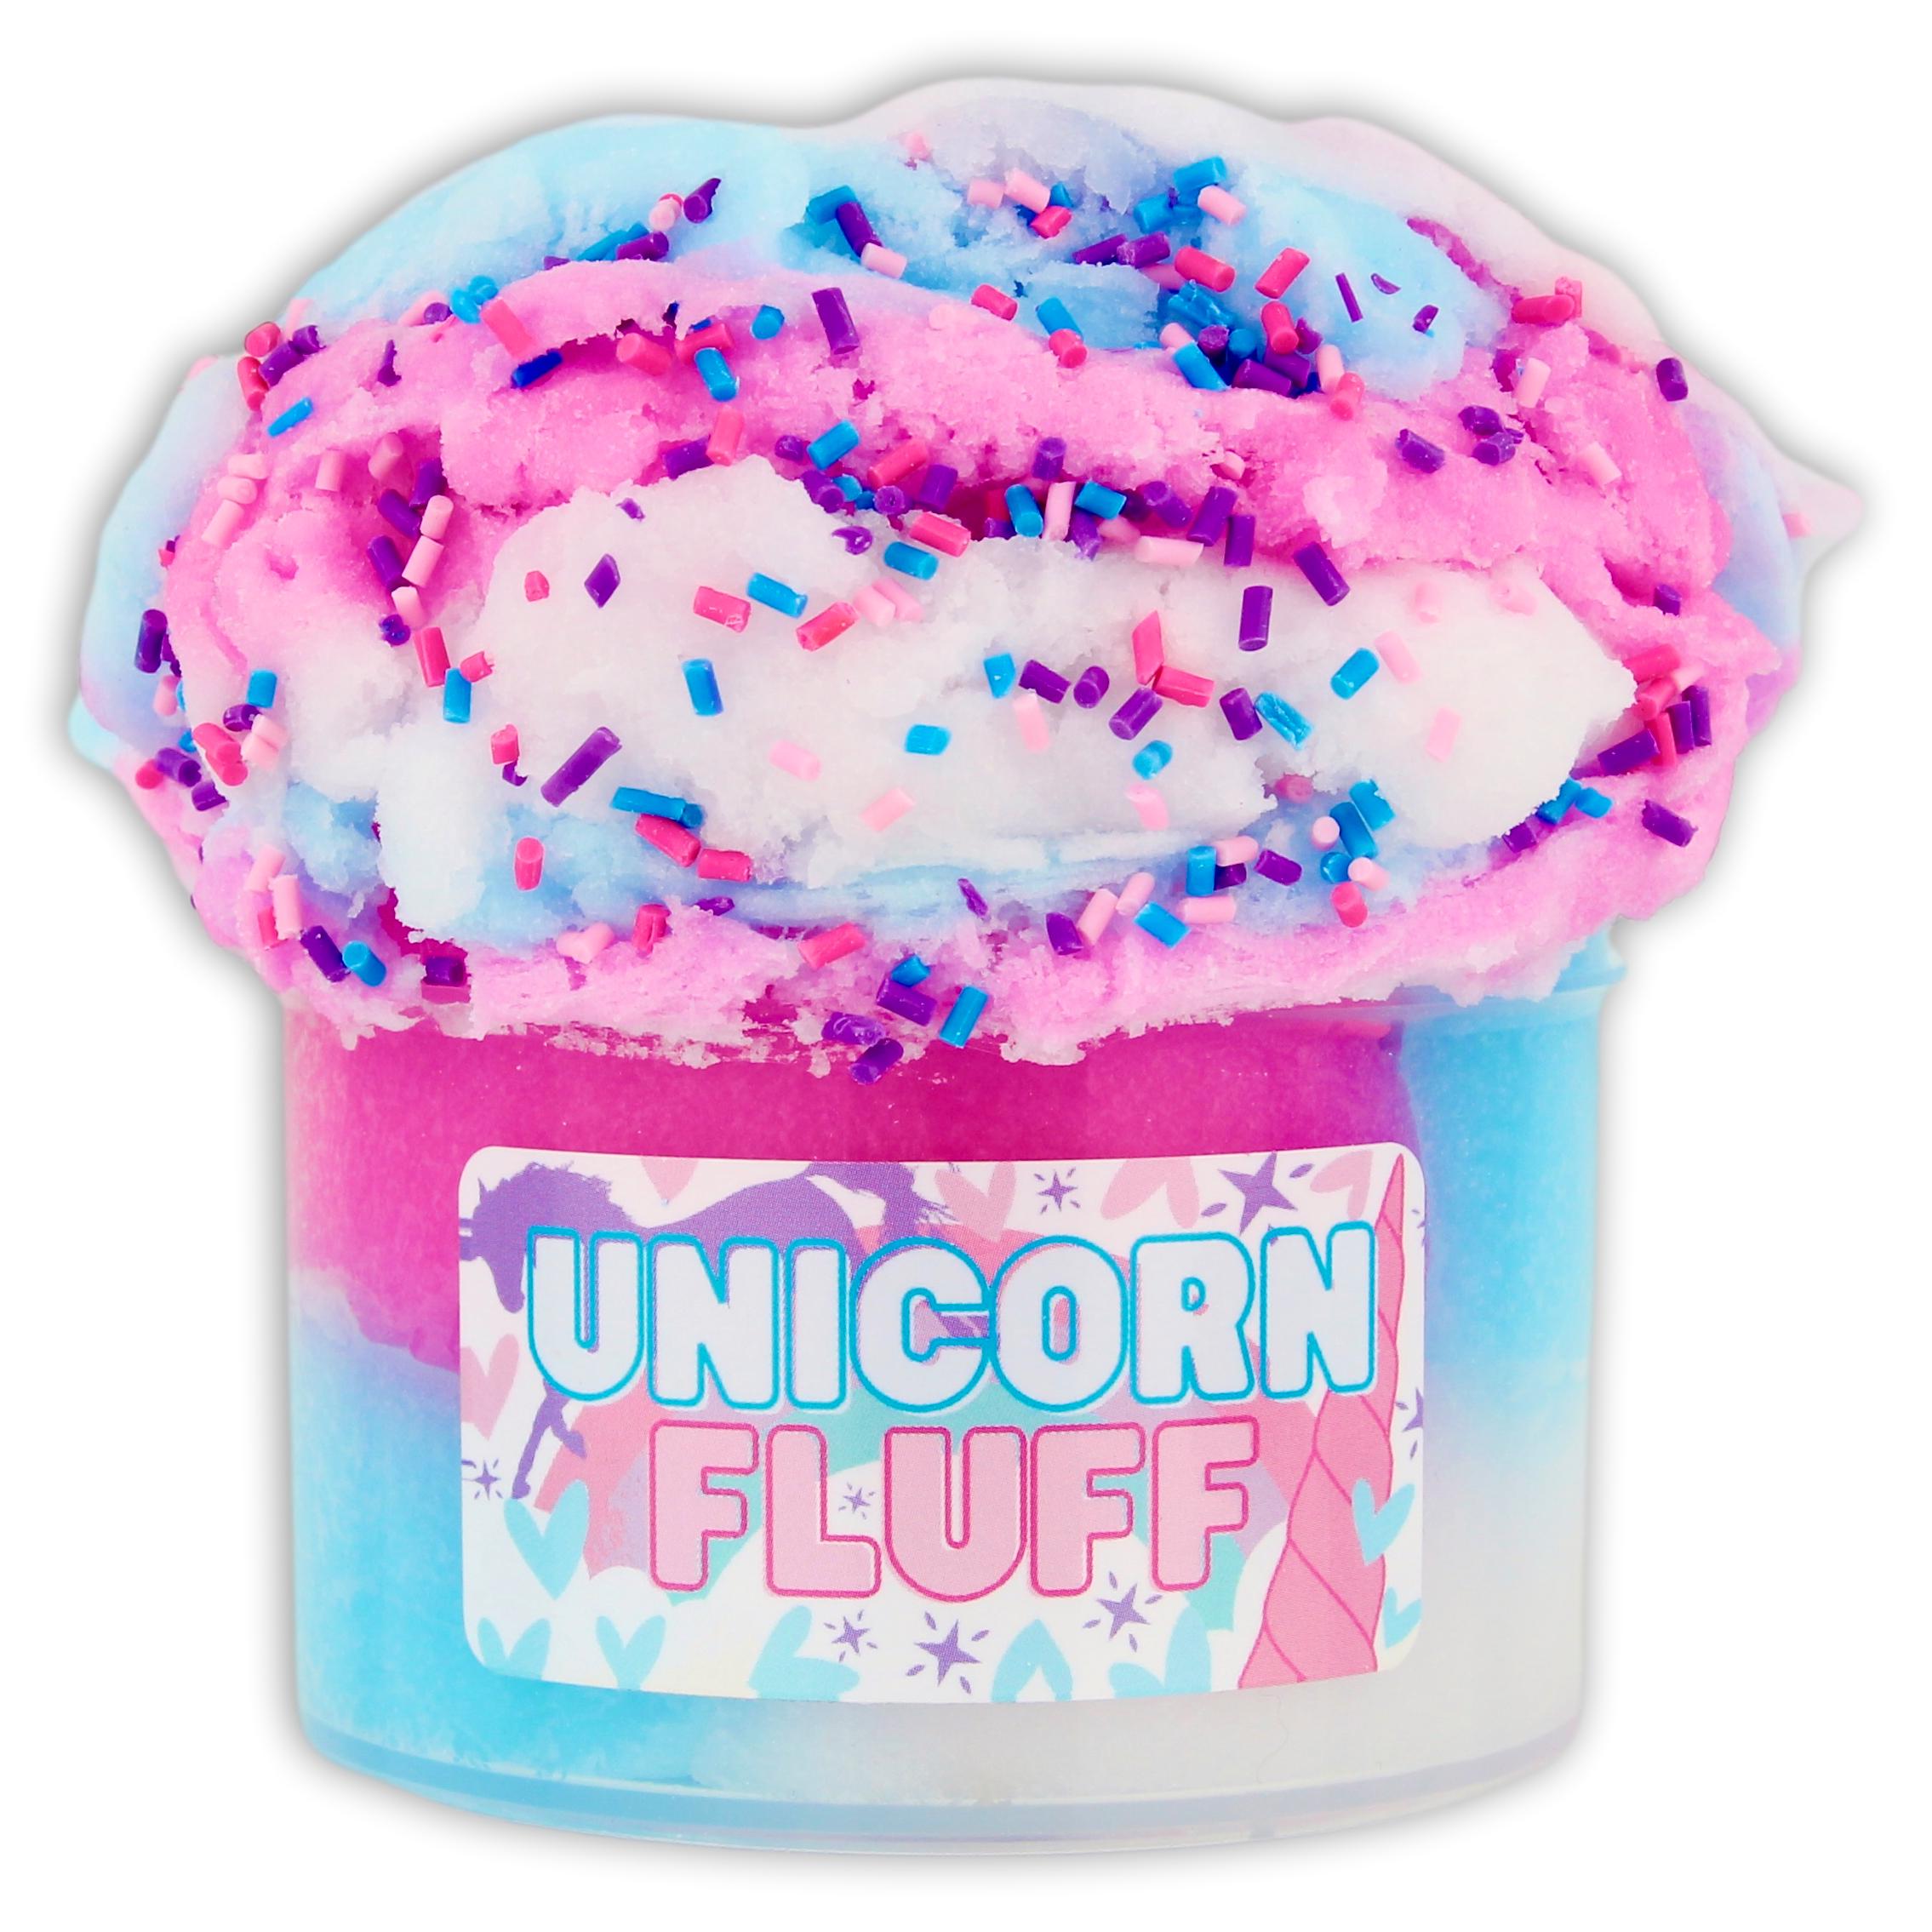 Unicorn Fluff - Wholesale Case of 18 - March 1st Release Date